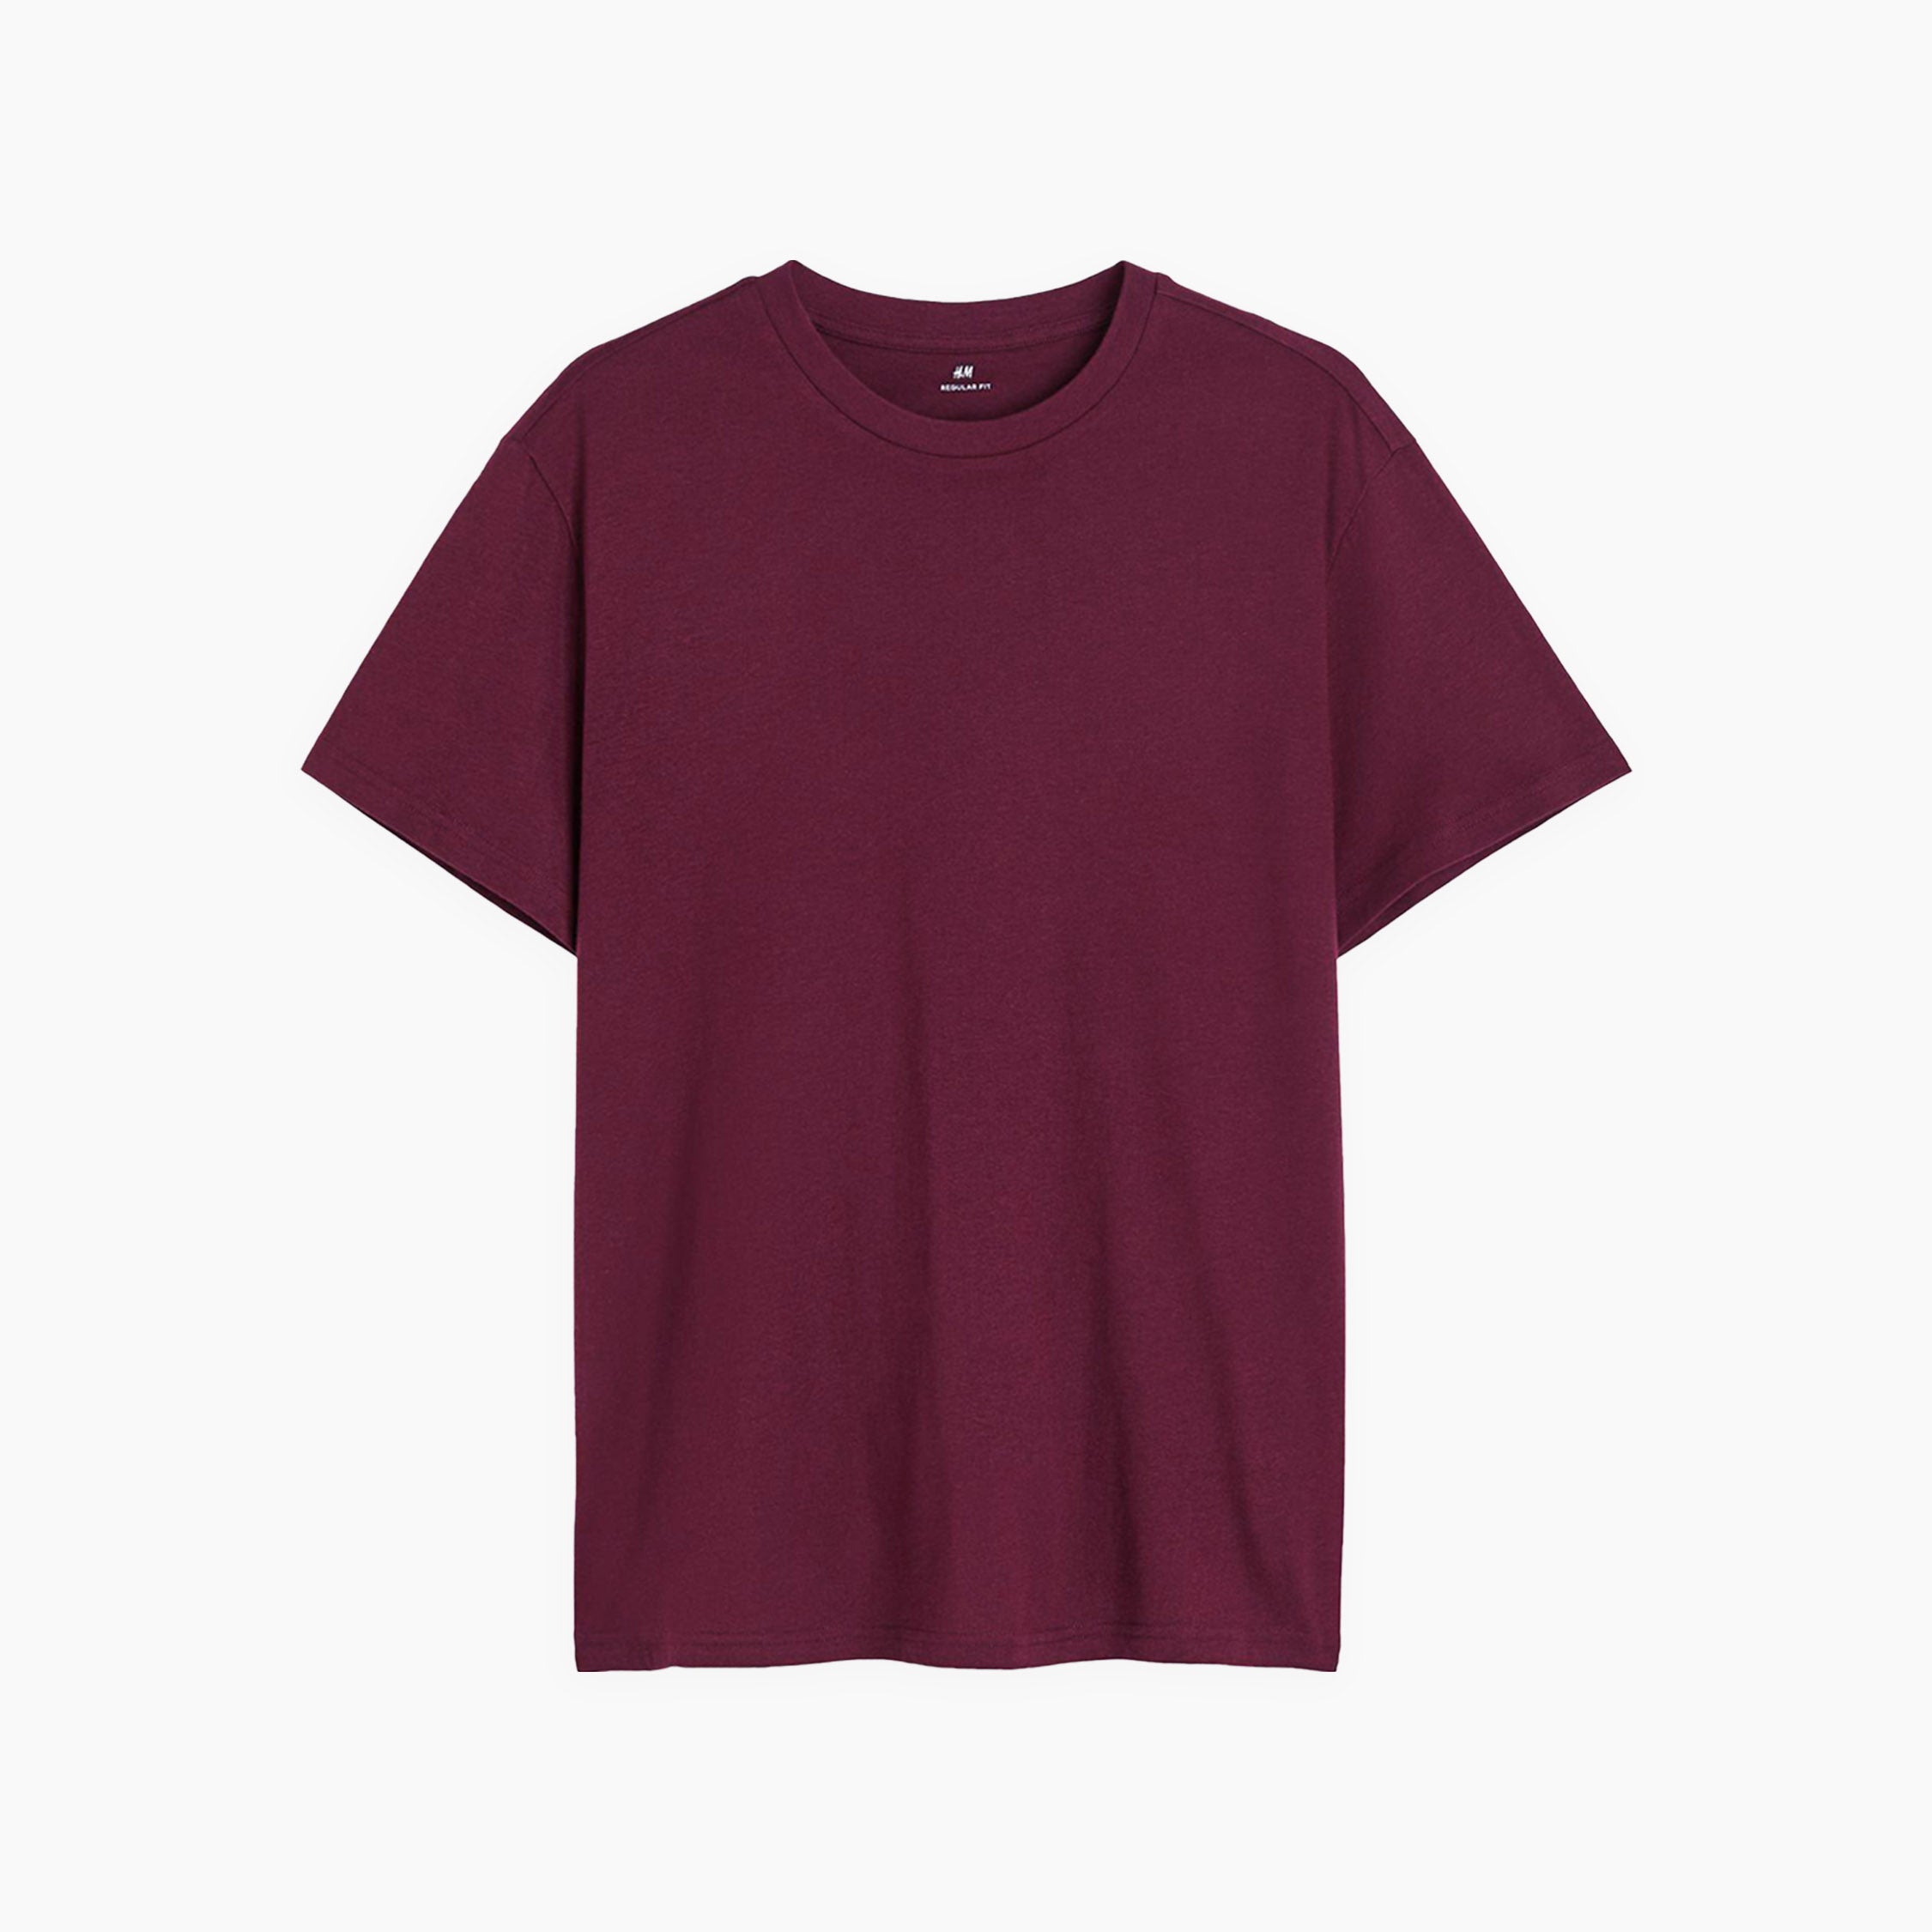 h-m-burgundy-t-shirt